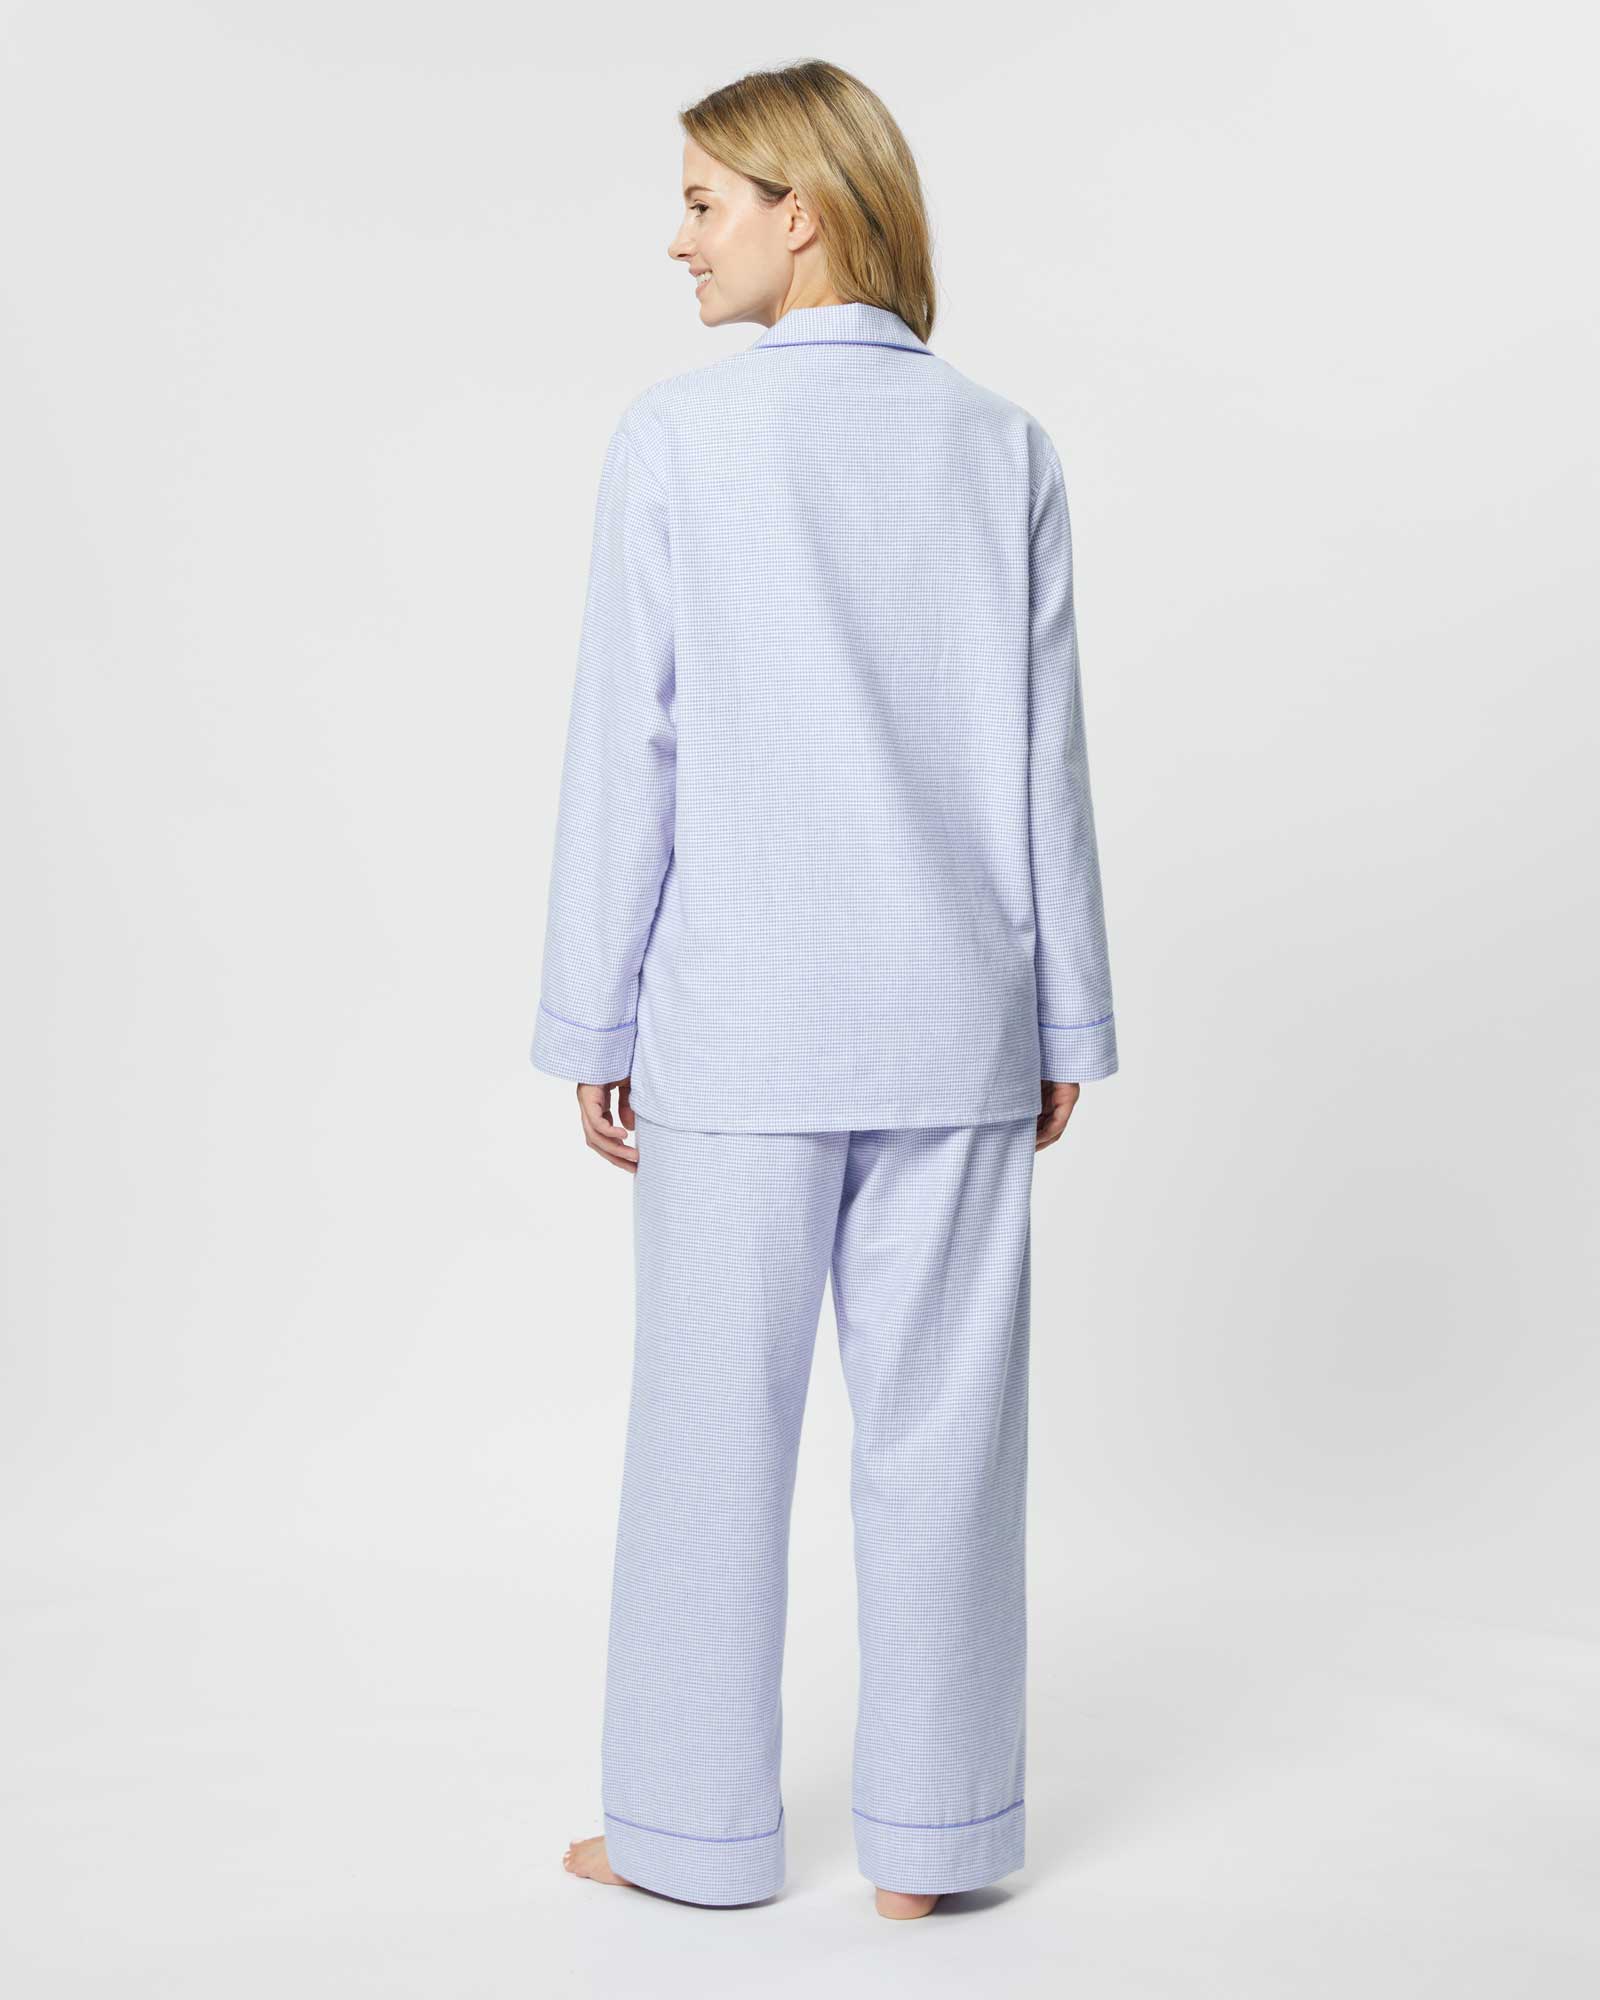 Girls Winter Warm Brushed Cotton Pyjamas - Blue